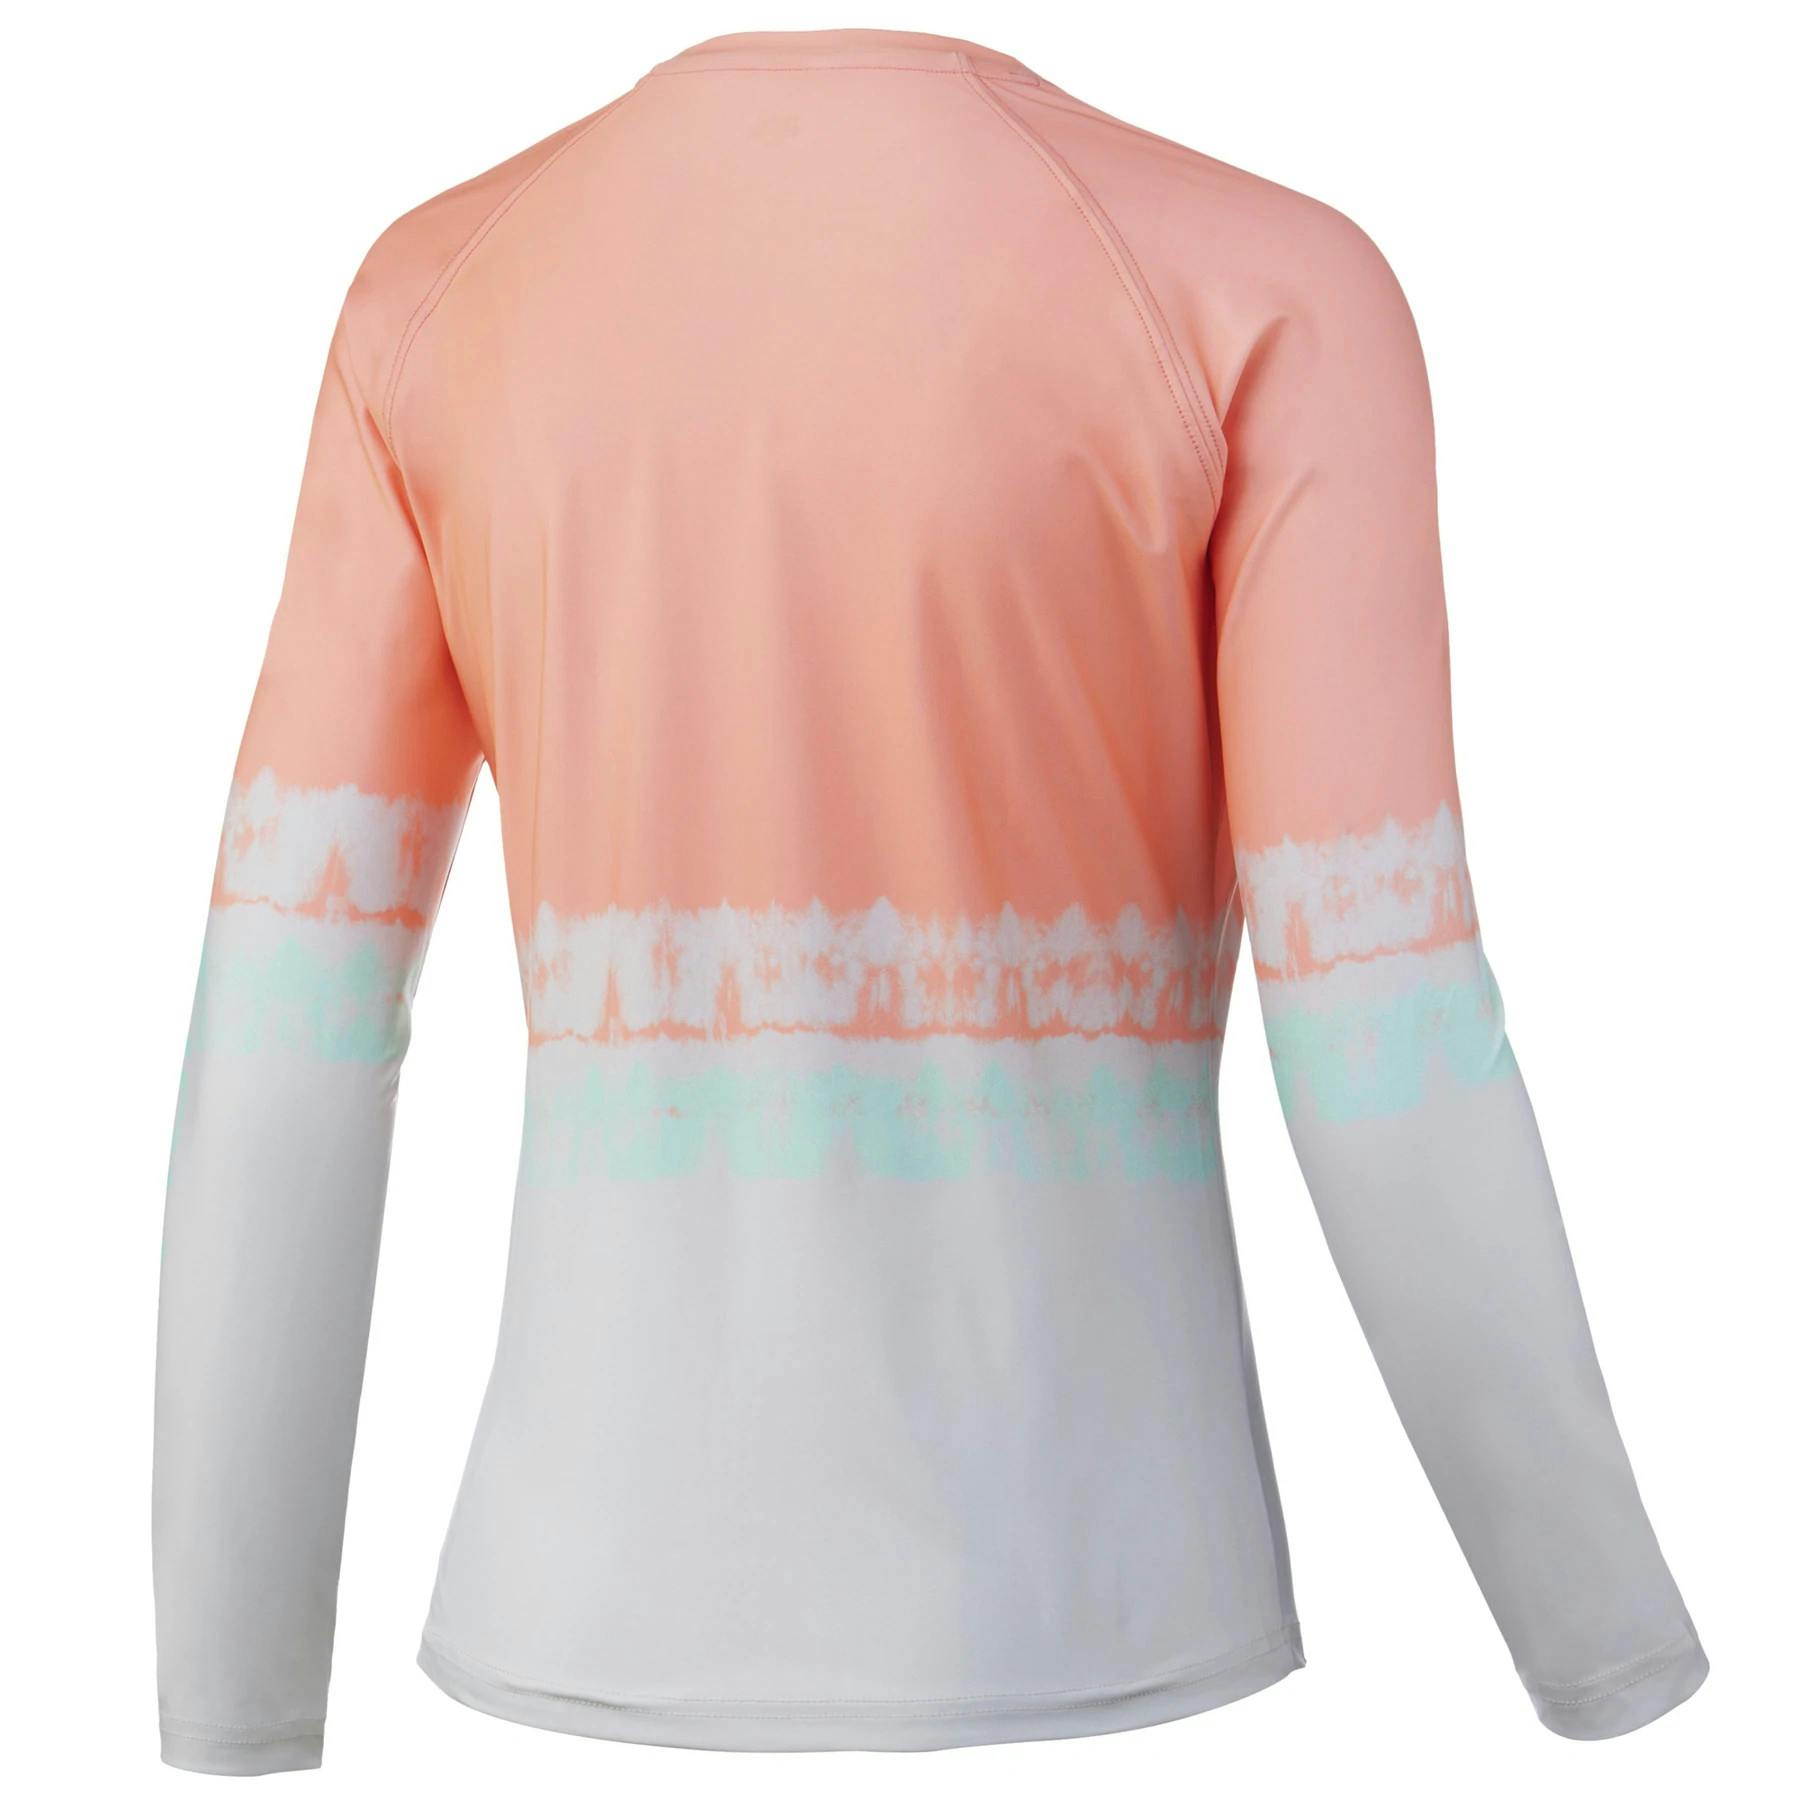 Huk Women's Salt Dye Pursuit Performance Shirt Back - Desert Flower